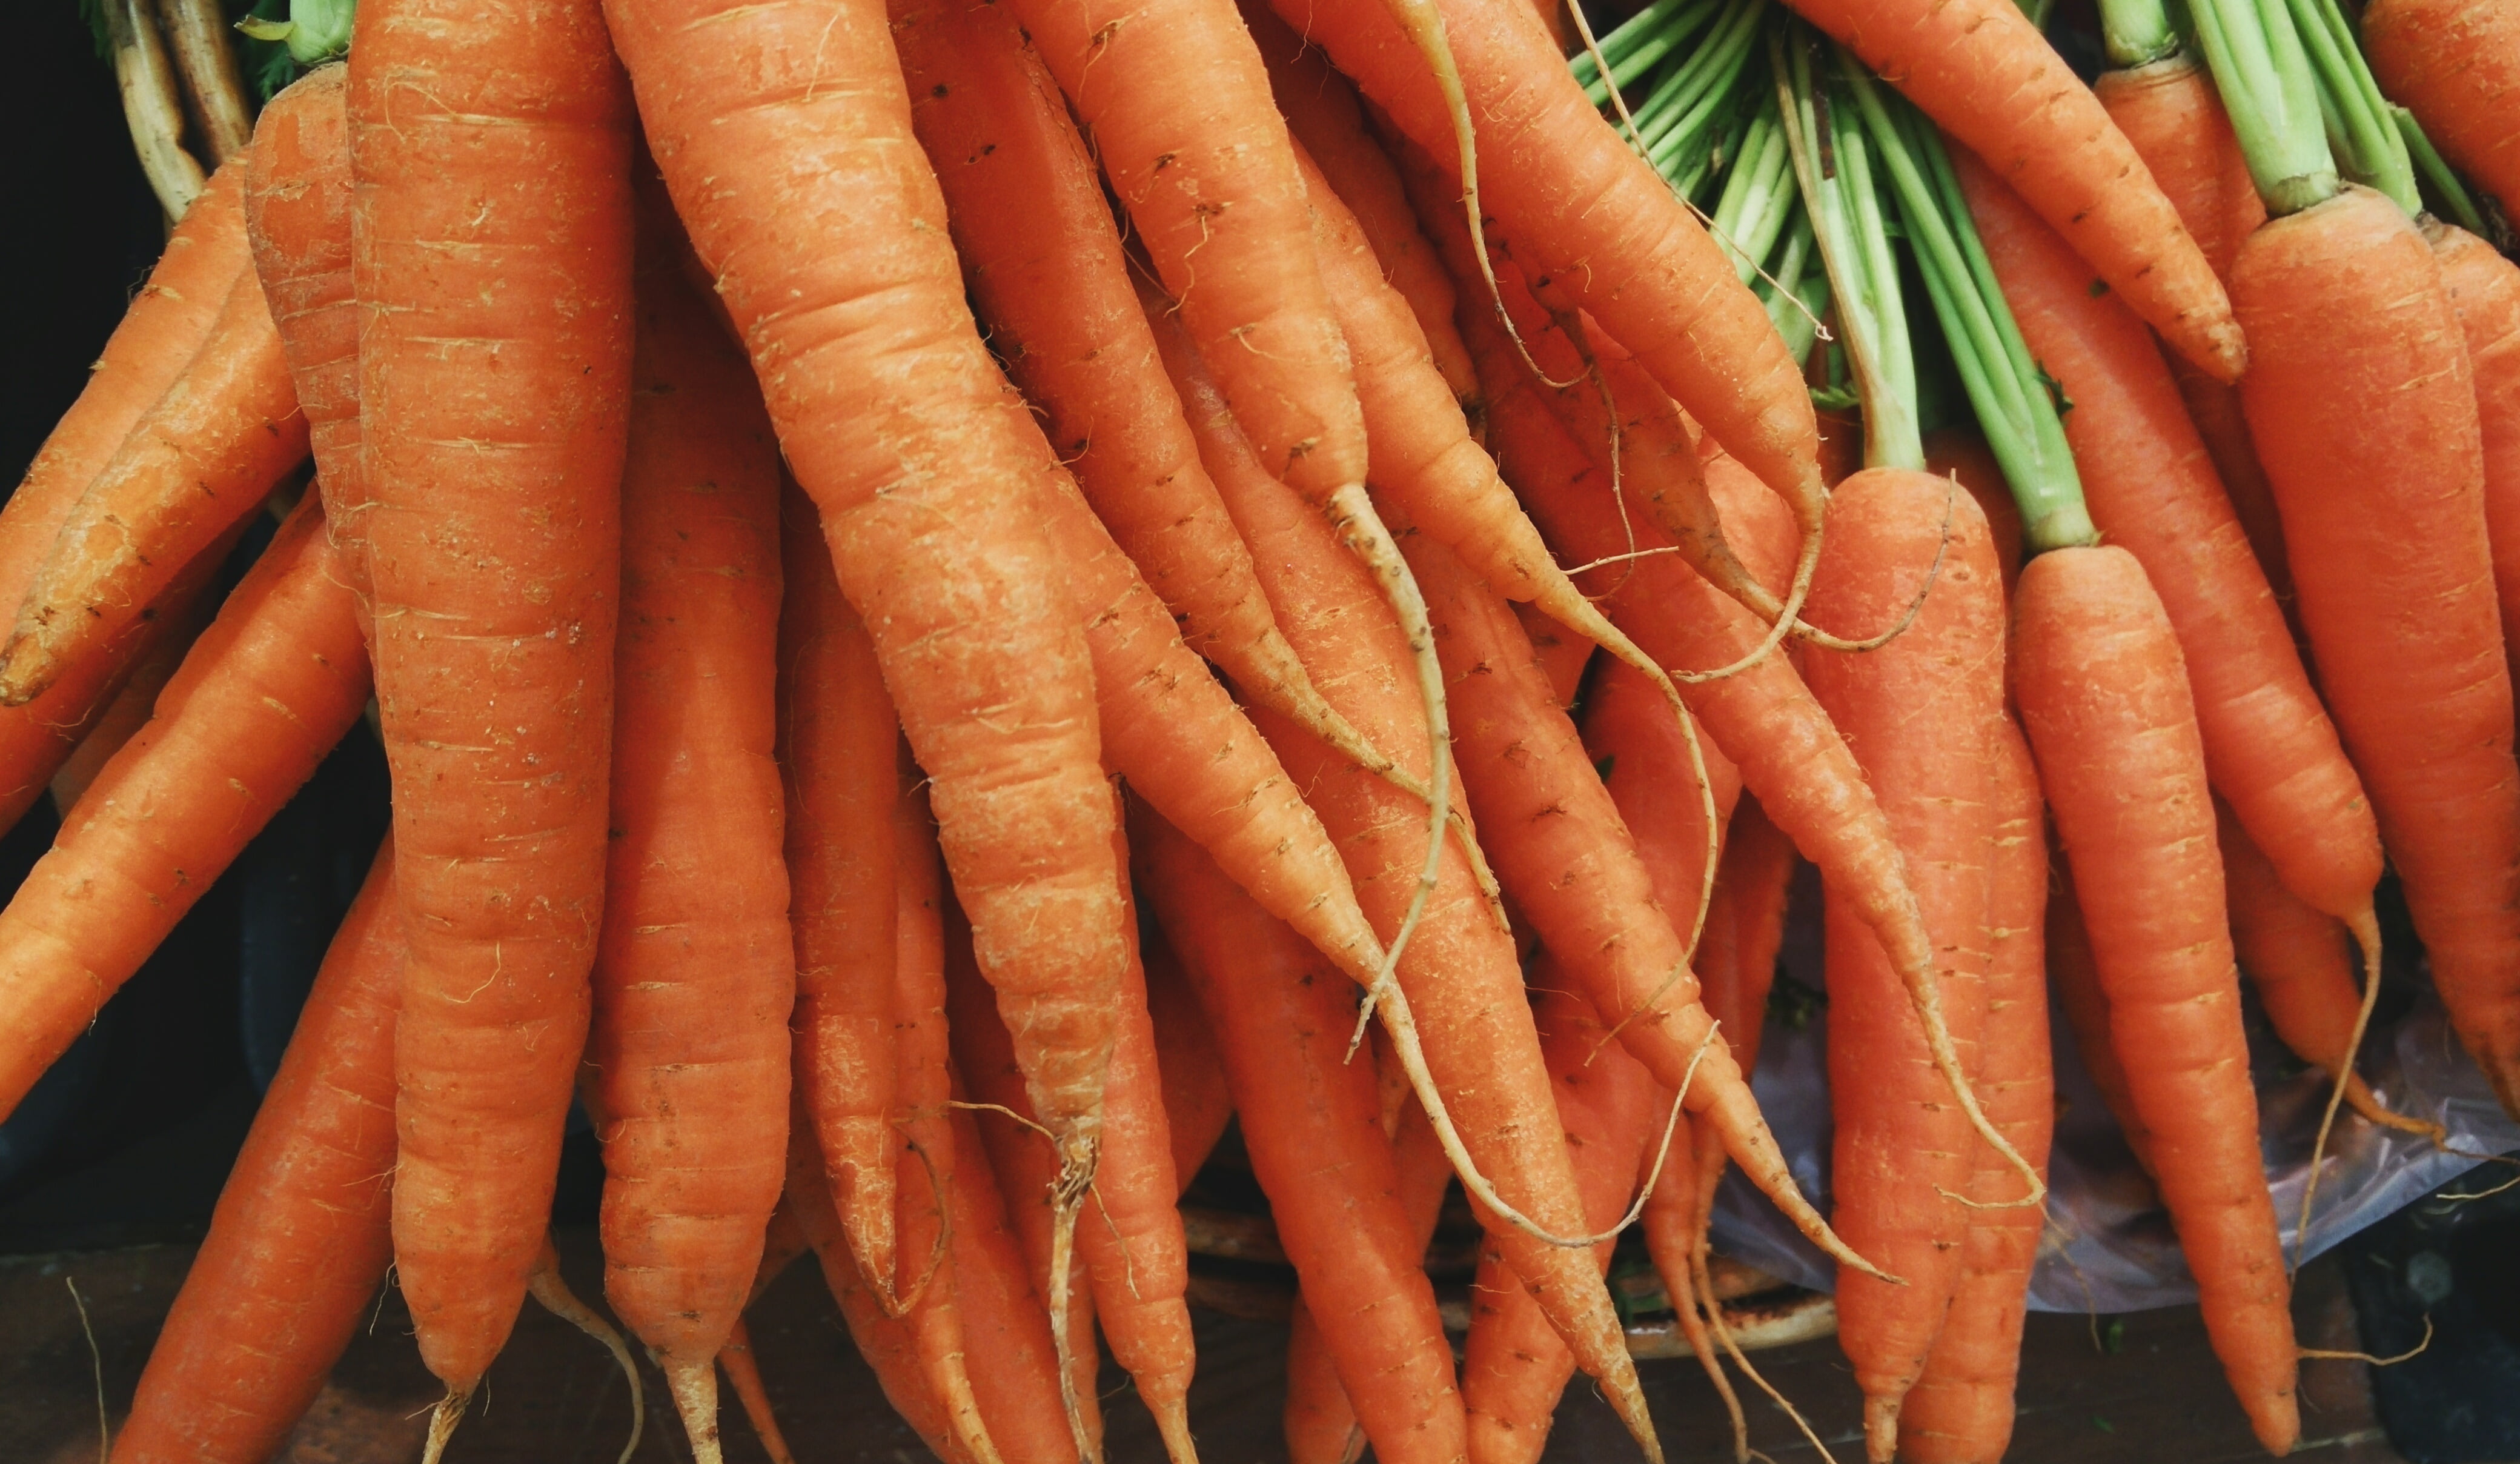 carrot lot, carrots, vegetables, many, food, freshness, organic